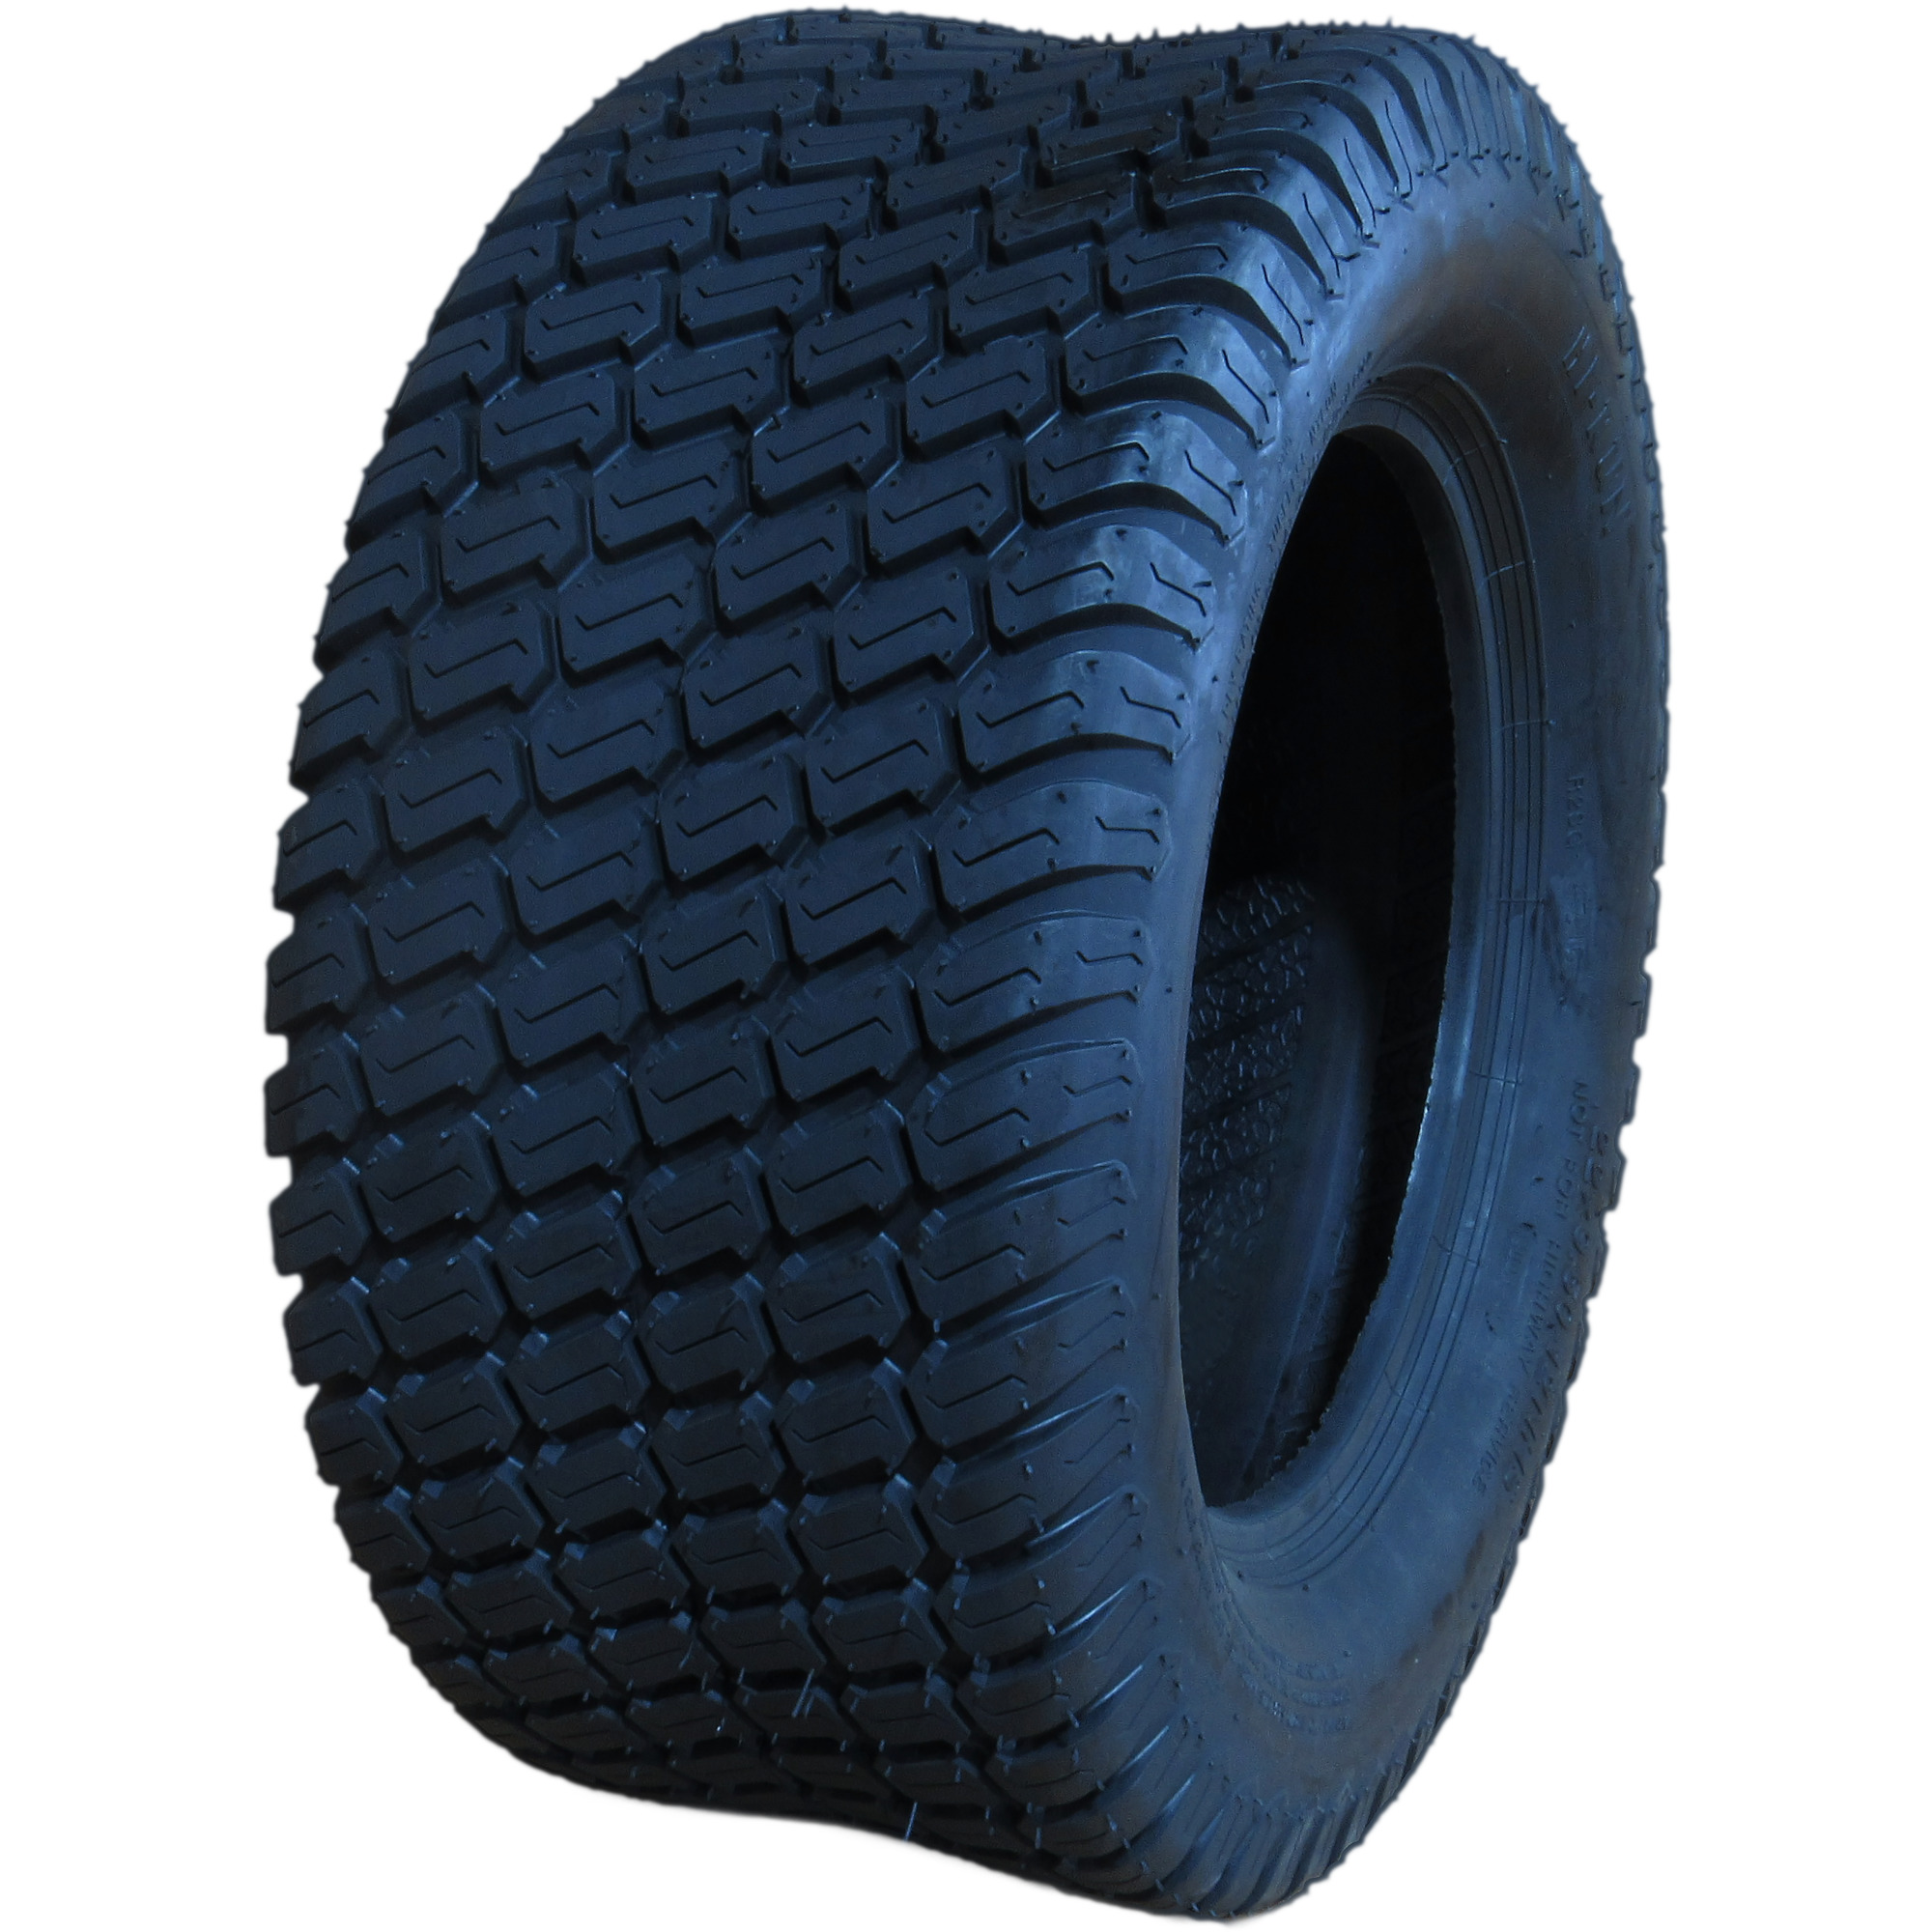 HI-RUN, Lawn Garden Tire, SU05 Turf, Tire Size 22X9.50-12 Load Range Rating B, Model WD1288